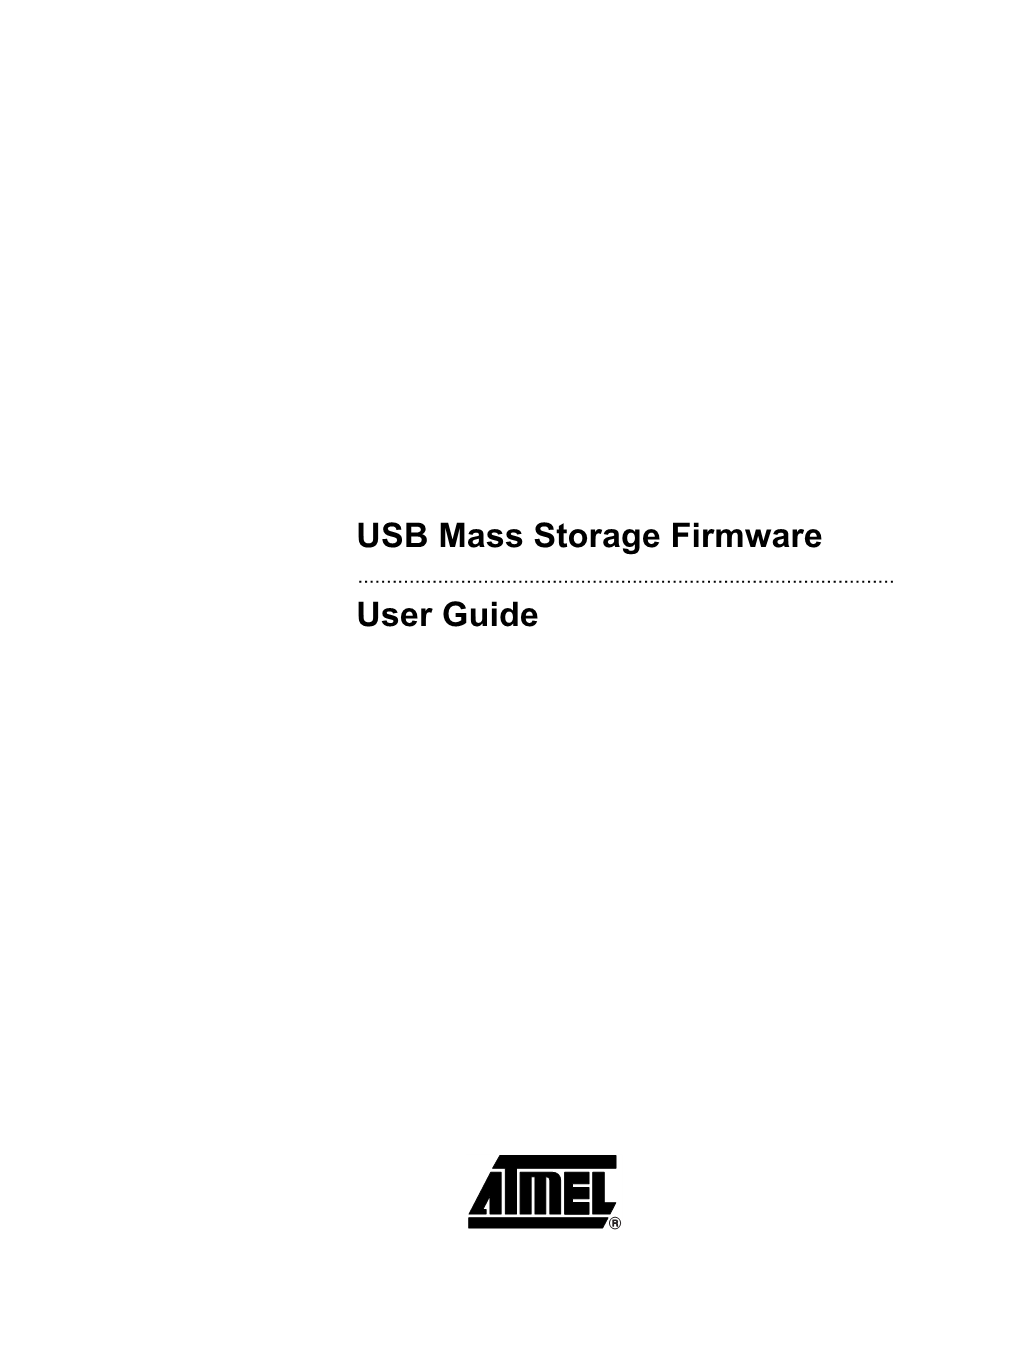 USB Mass Storage Firmware User Guide